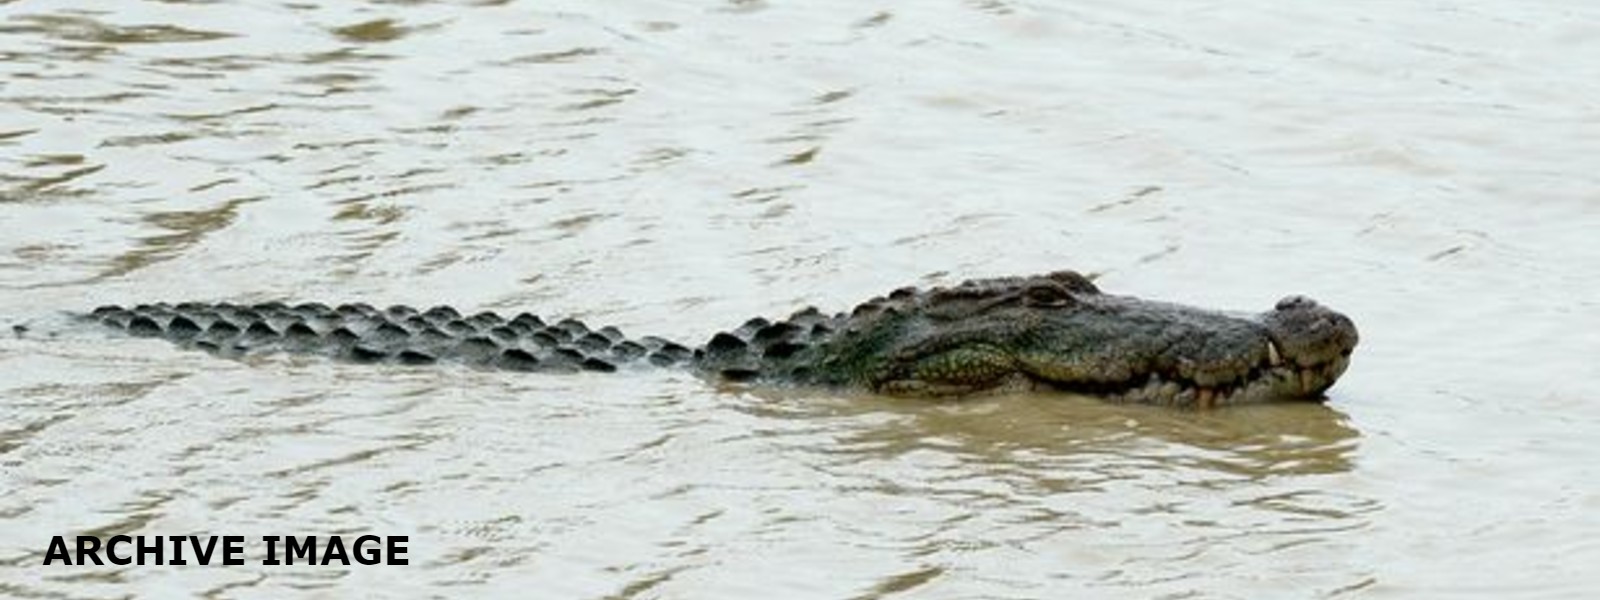 Dehiwala Crocodile spotted in Wellawatte Canal 